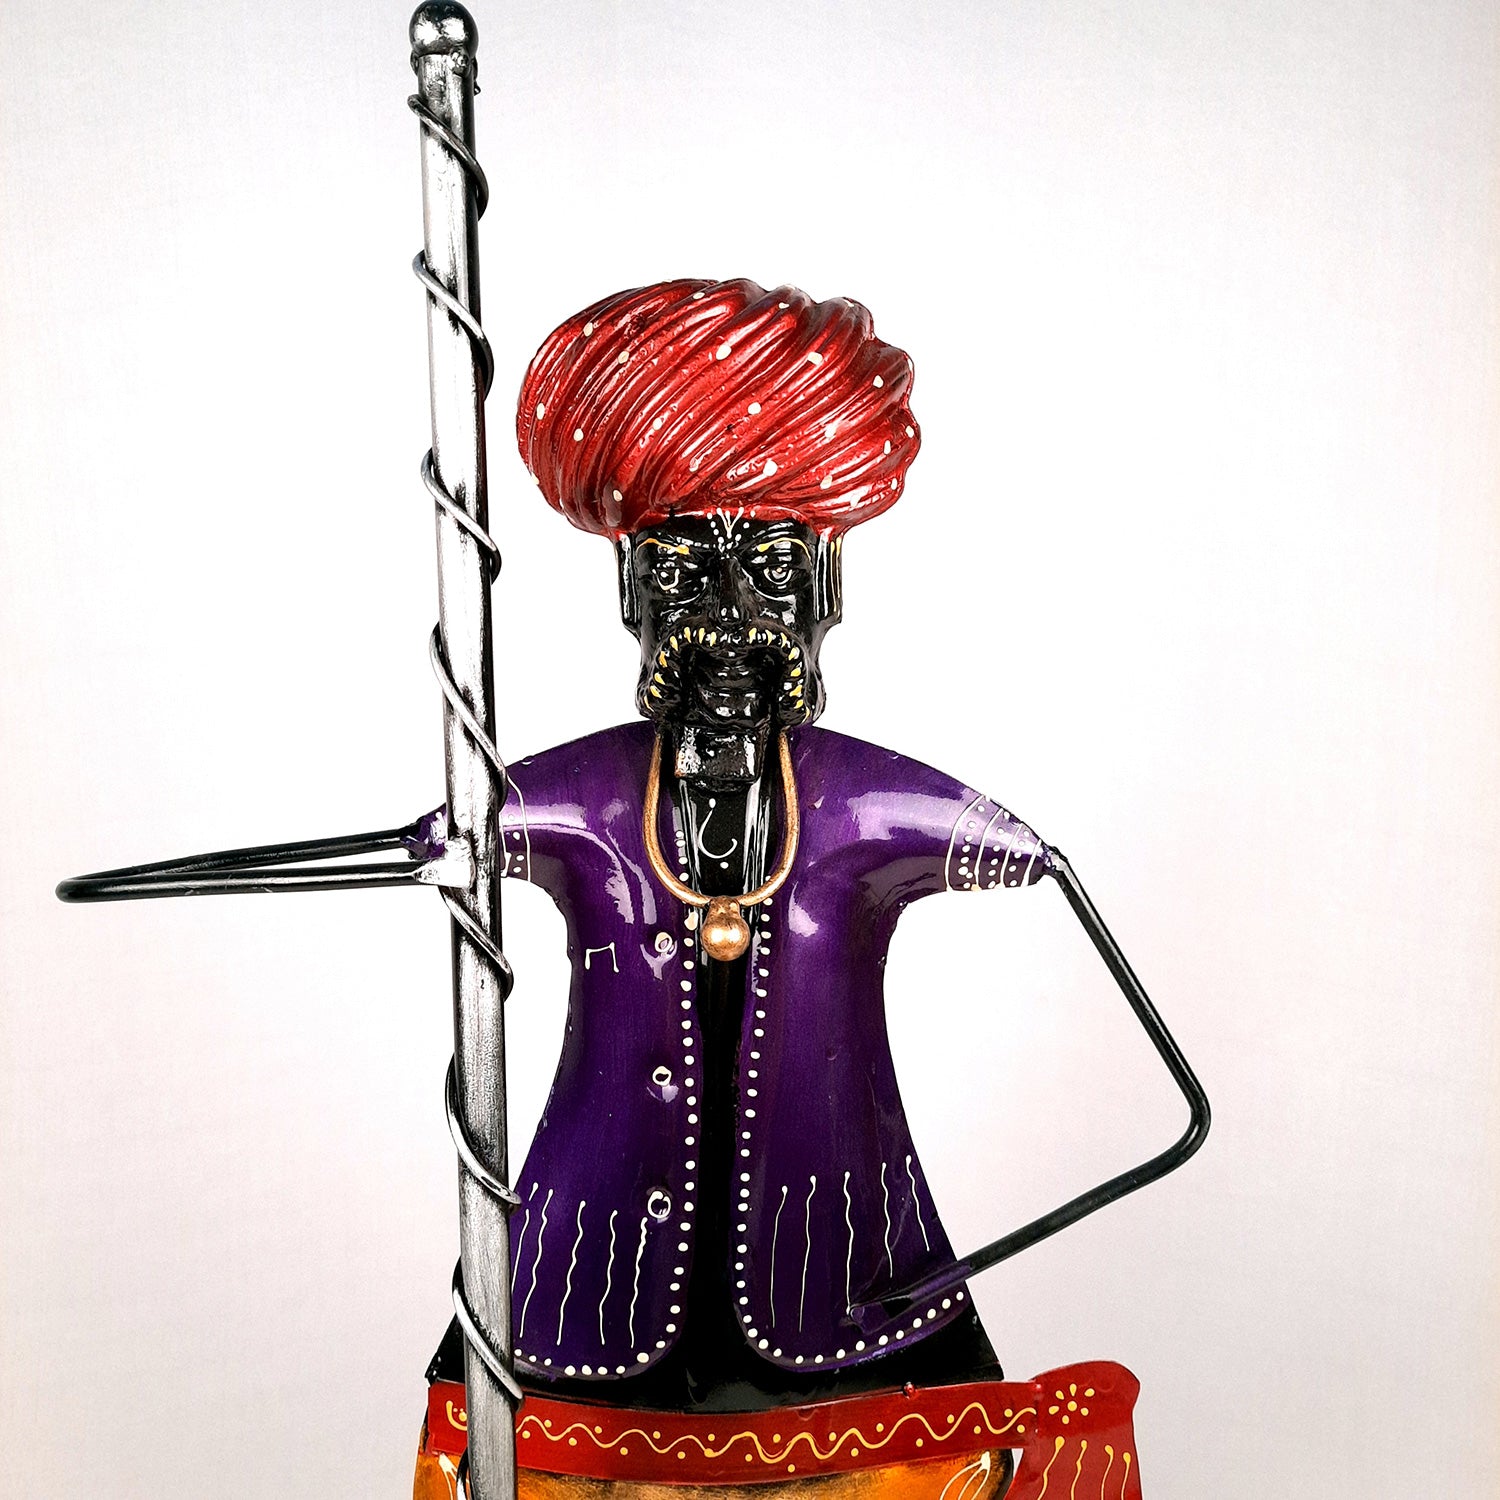 Showpiece Darbaan For Home Decor | Handicraft Figurines - For Entrance, Corner, Living Room, Office Decoration |Big Showpieces For Housewarming Gifts - 30 Inch - Apkamart #Color_Purple